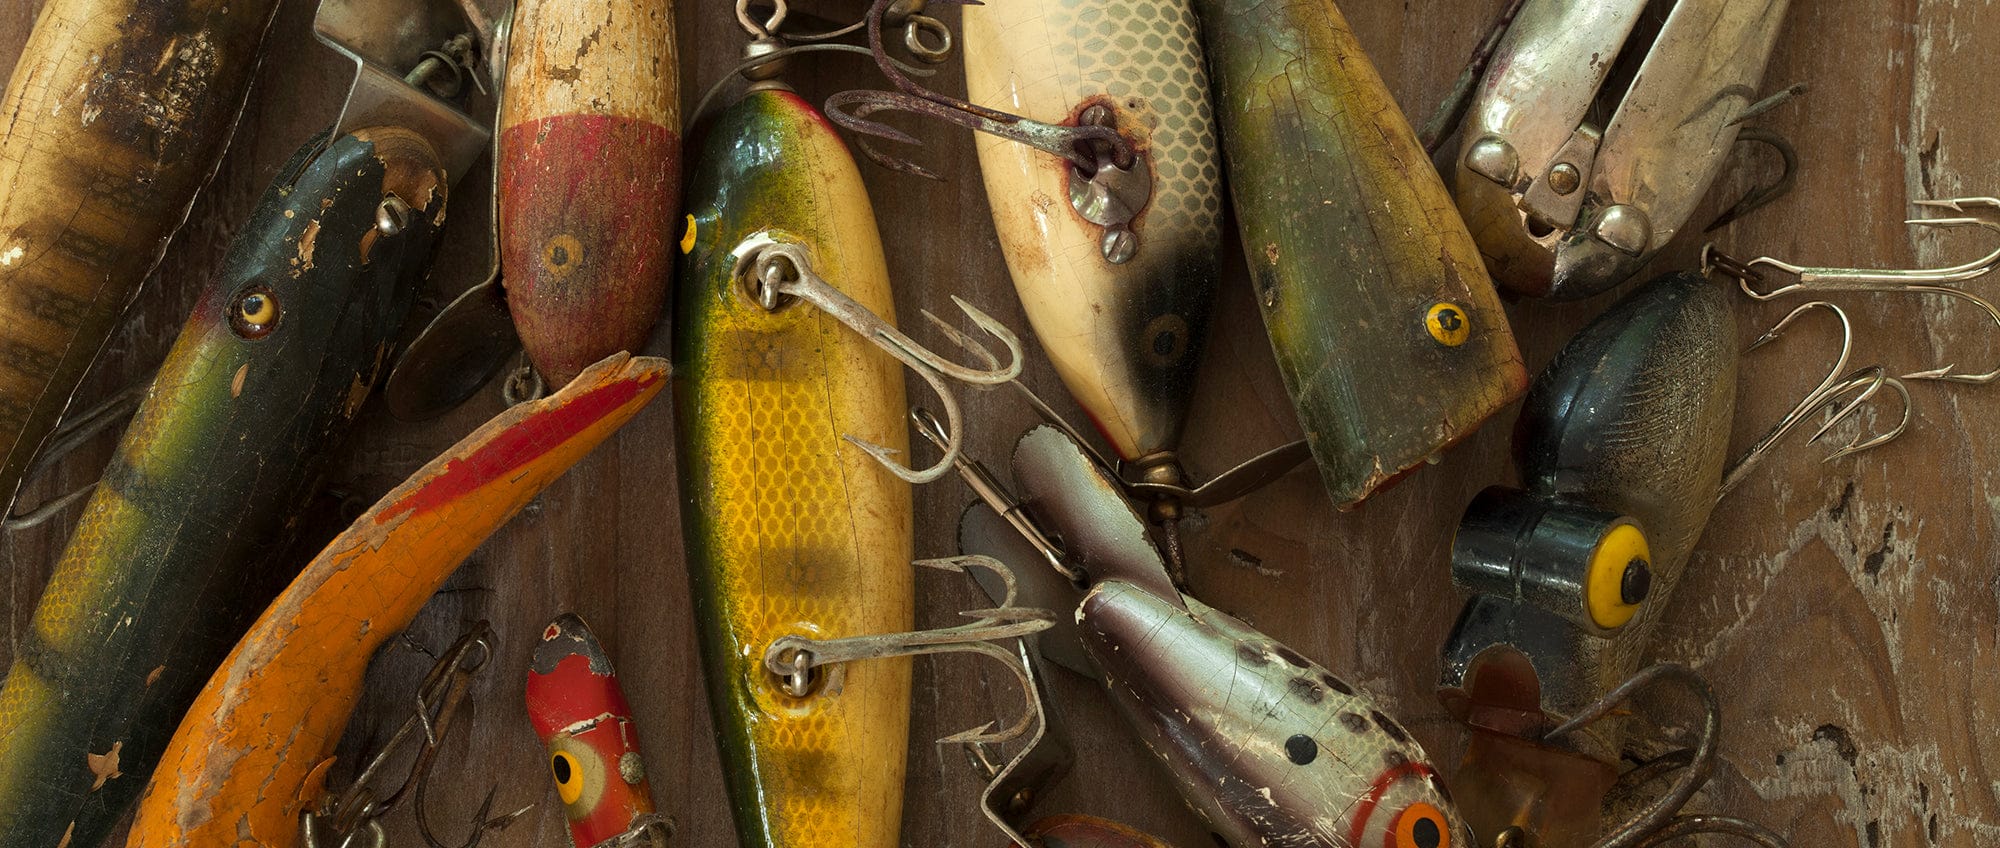 Creek Chub Wood and Glass Eye Fishing Lures For Sale COLLECTORS!